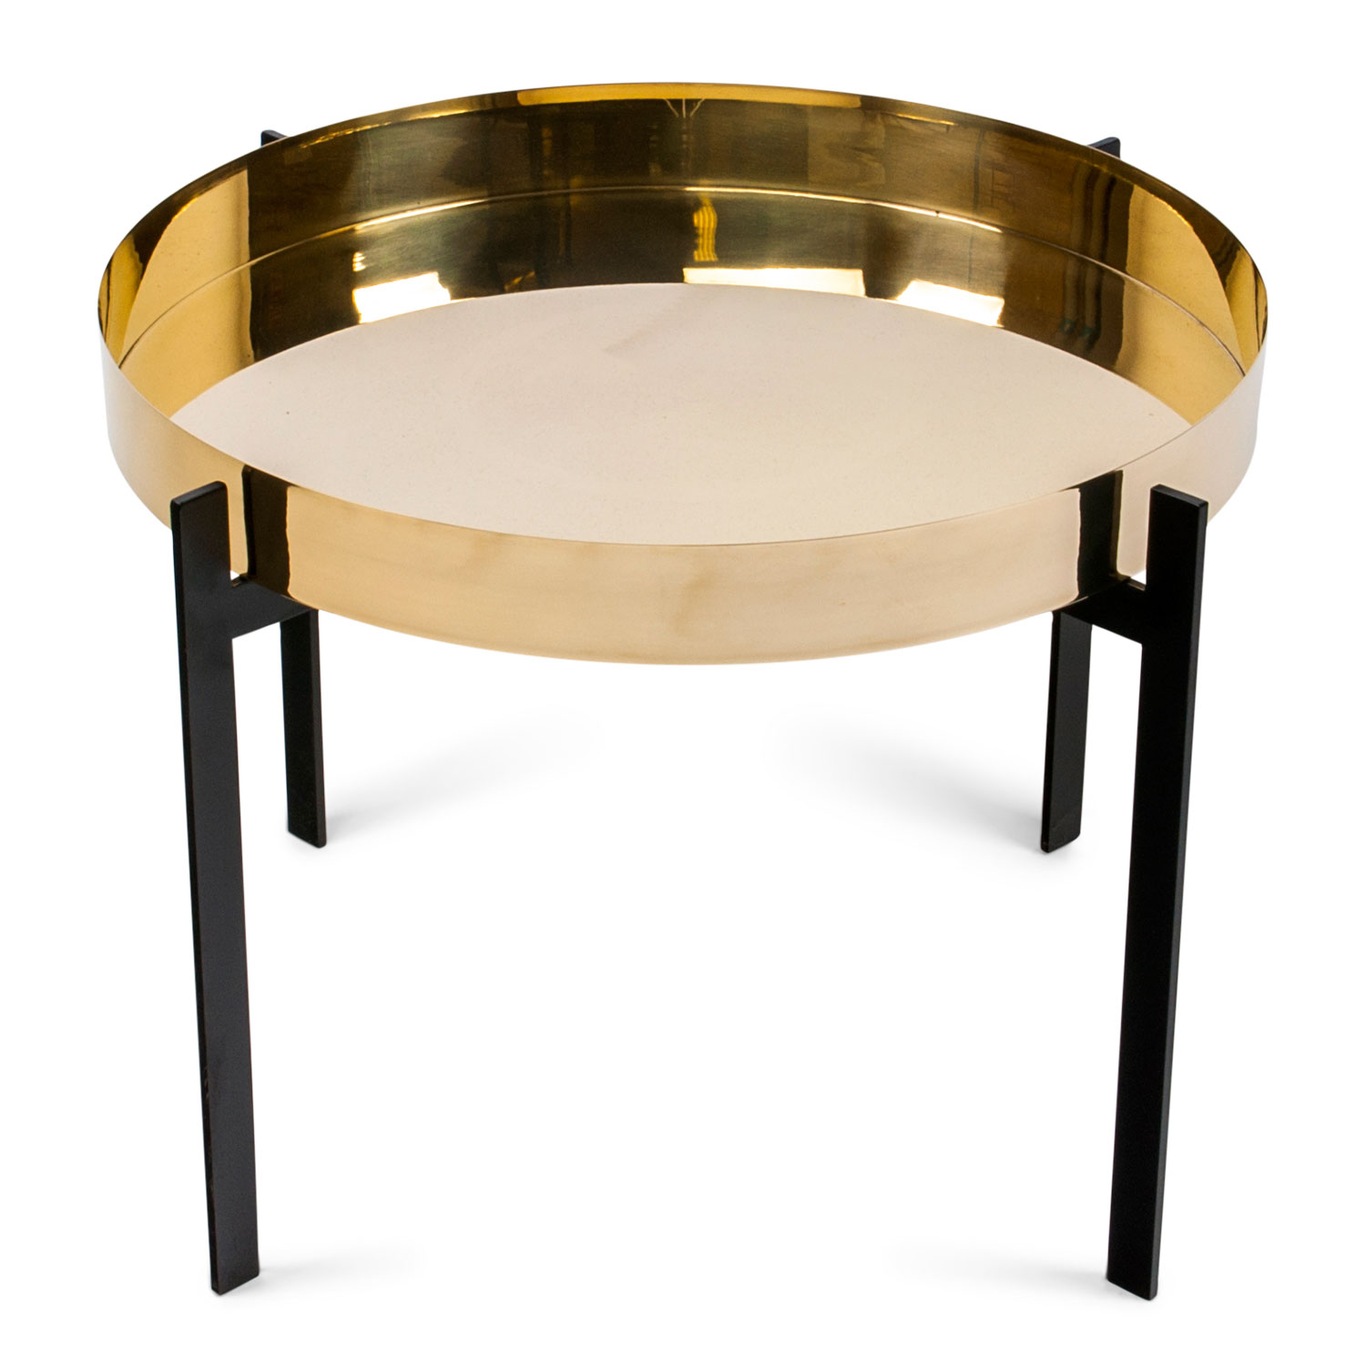 Single Deck Table, Black Base, Brass